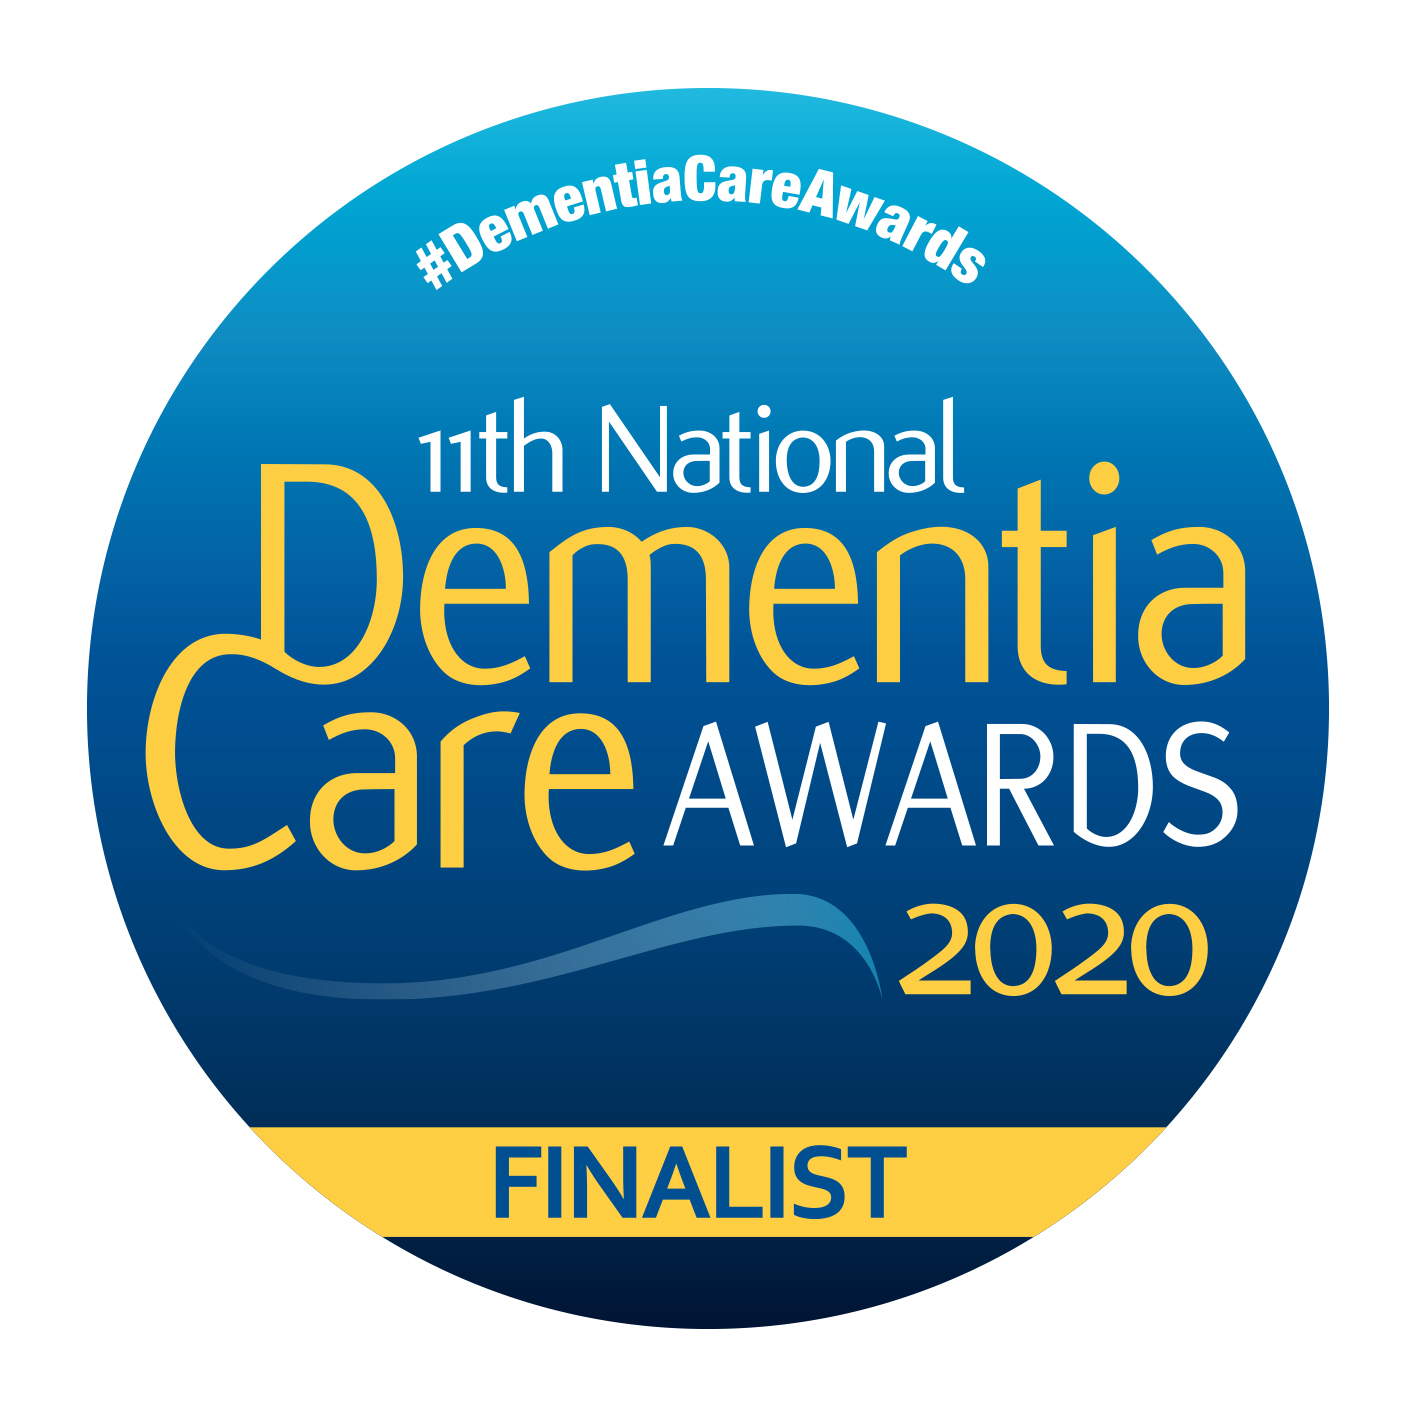 Dementia Care Awards 2020 logo finalist